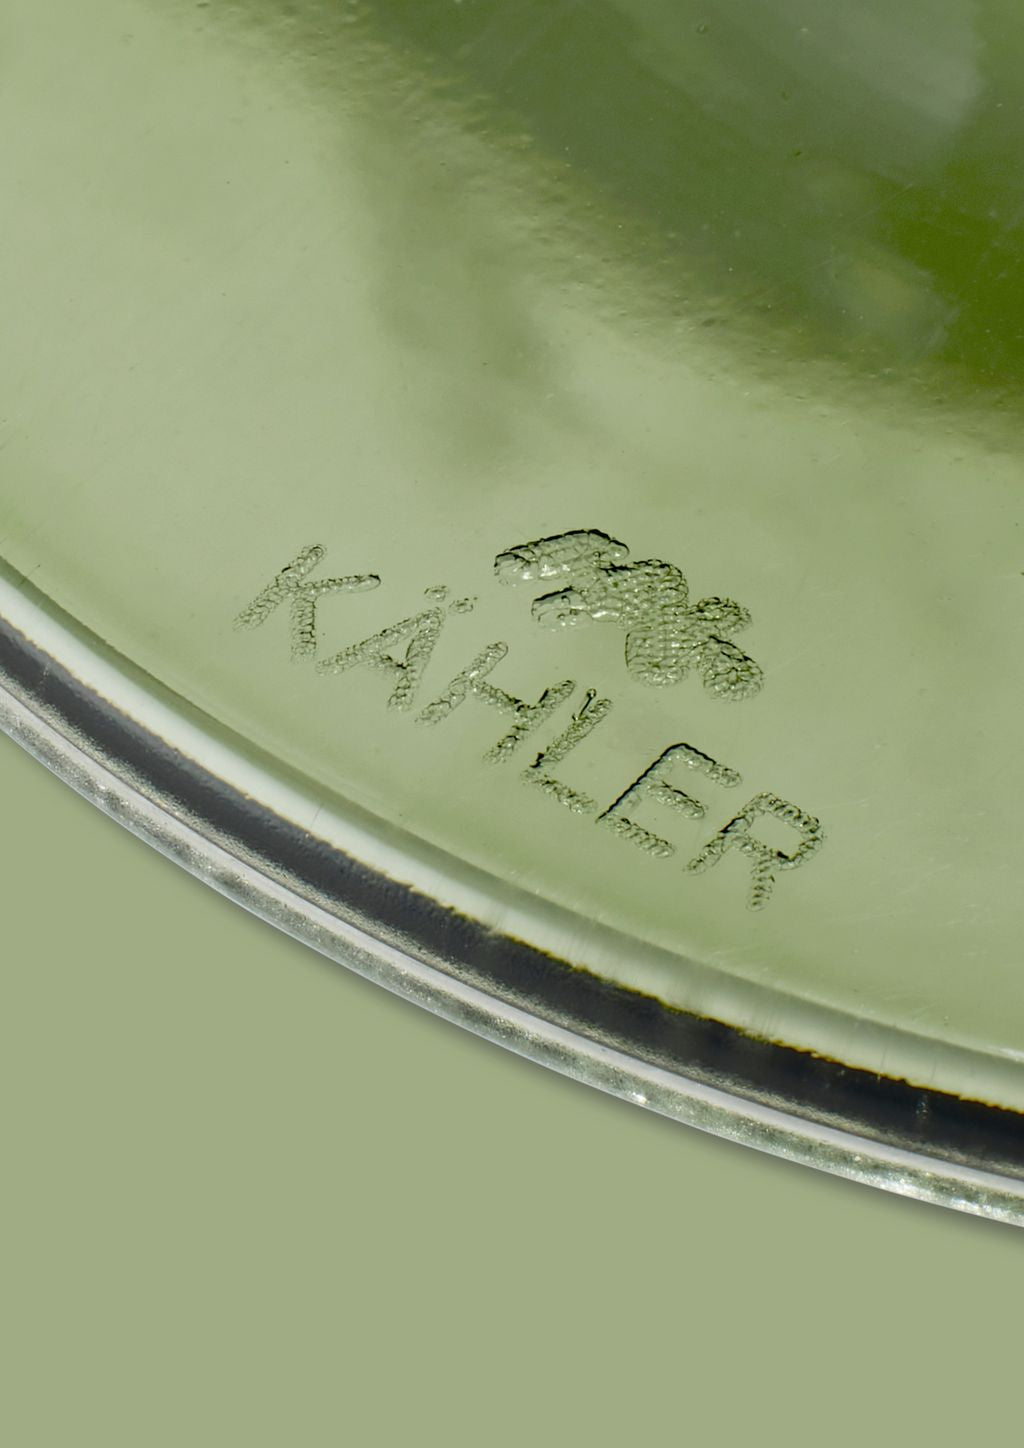 Kähler Hammershøi White Wine Glass 35 Cl, zelená 2 p Cs.